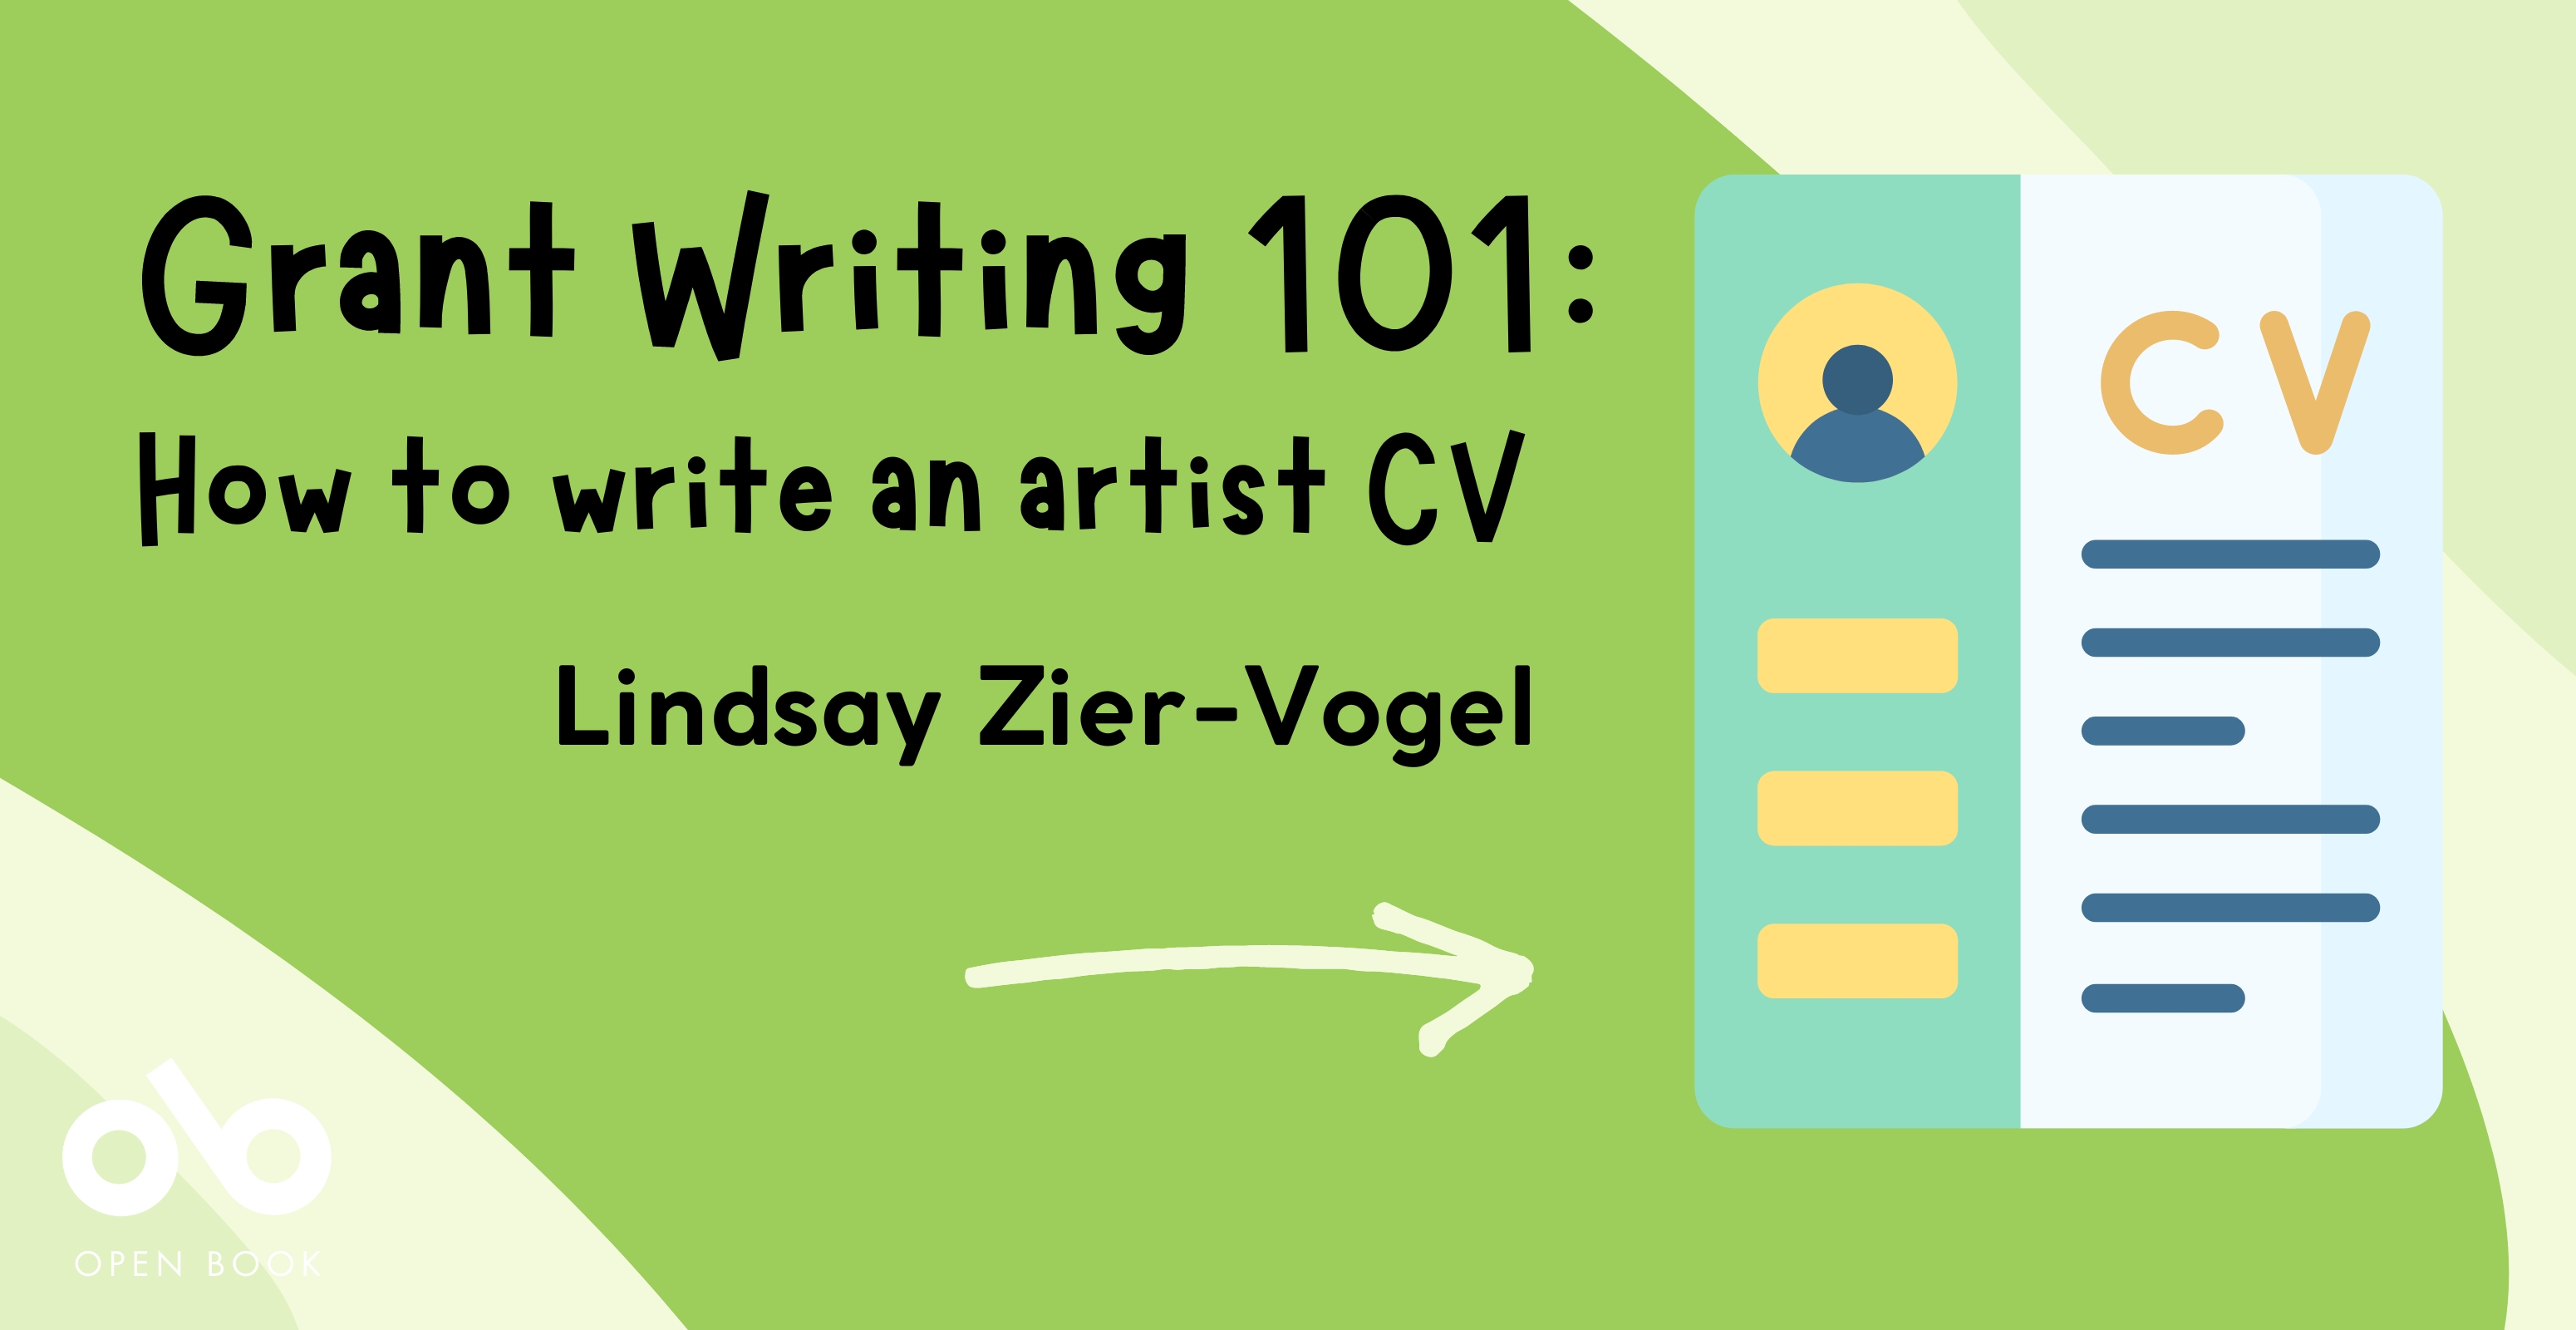 Grant Writing 101 - Lindsay Zier-Vogel